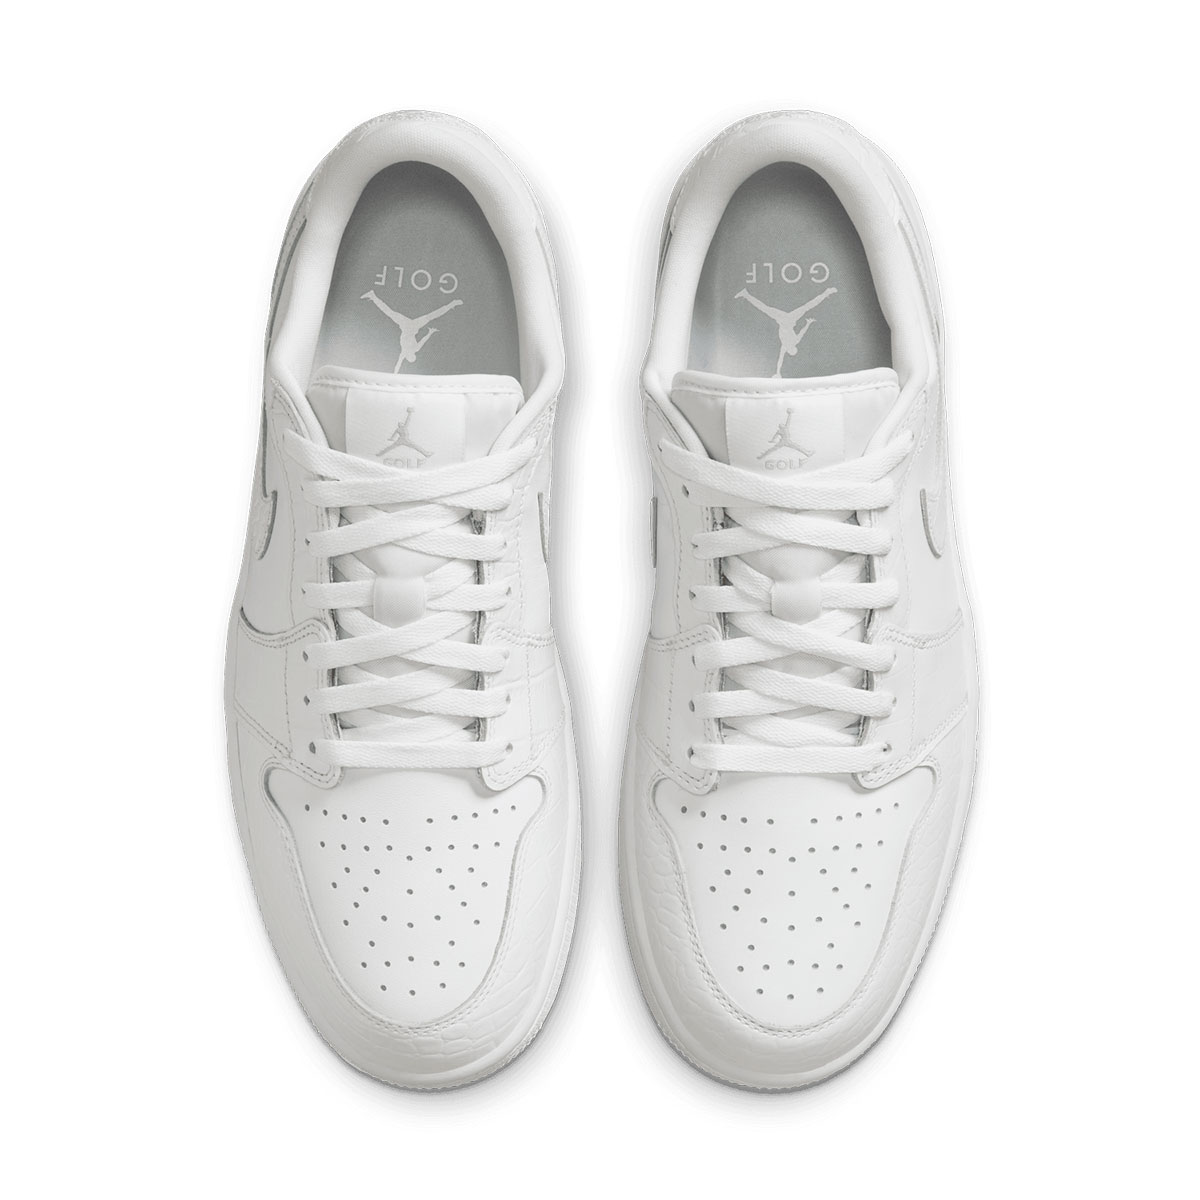 Nike Men's Air Jordan 1 Low G Waterproof Spikeless Golf Shoes from ...